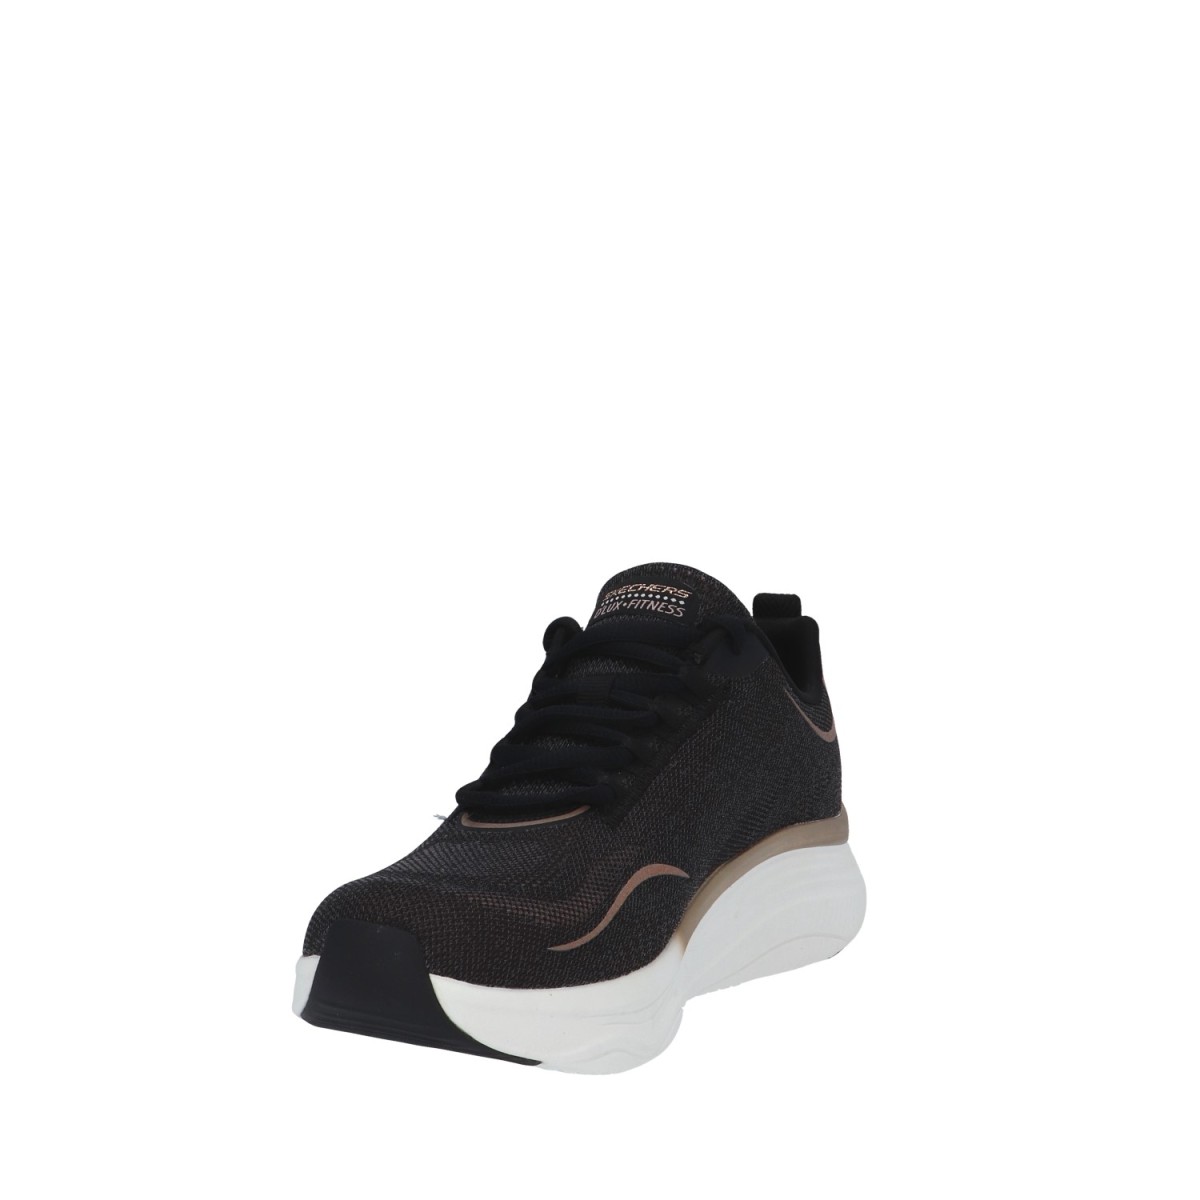 Skechers Sneaker Nero/rose gold Gomma 149837